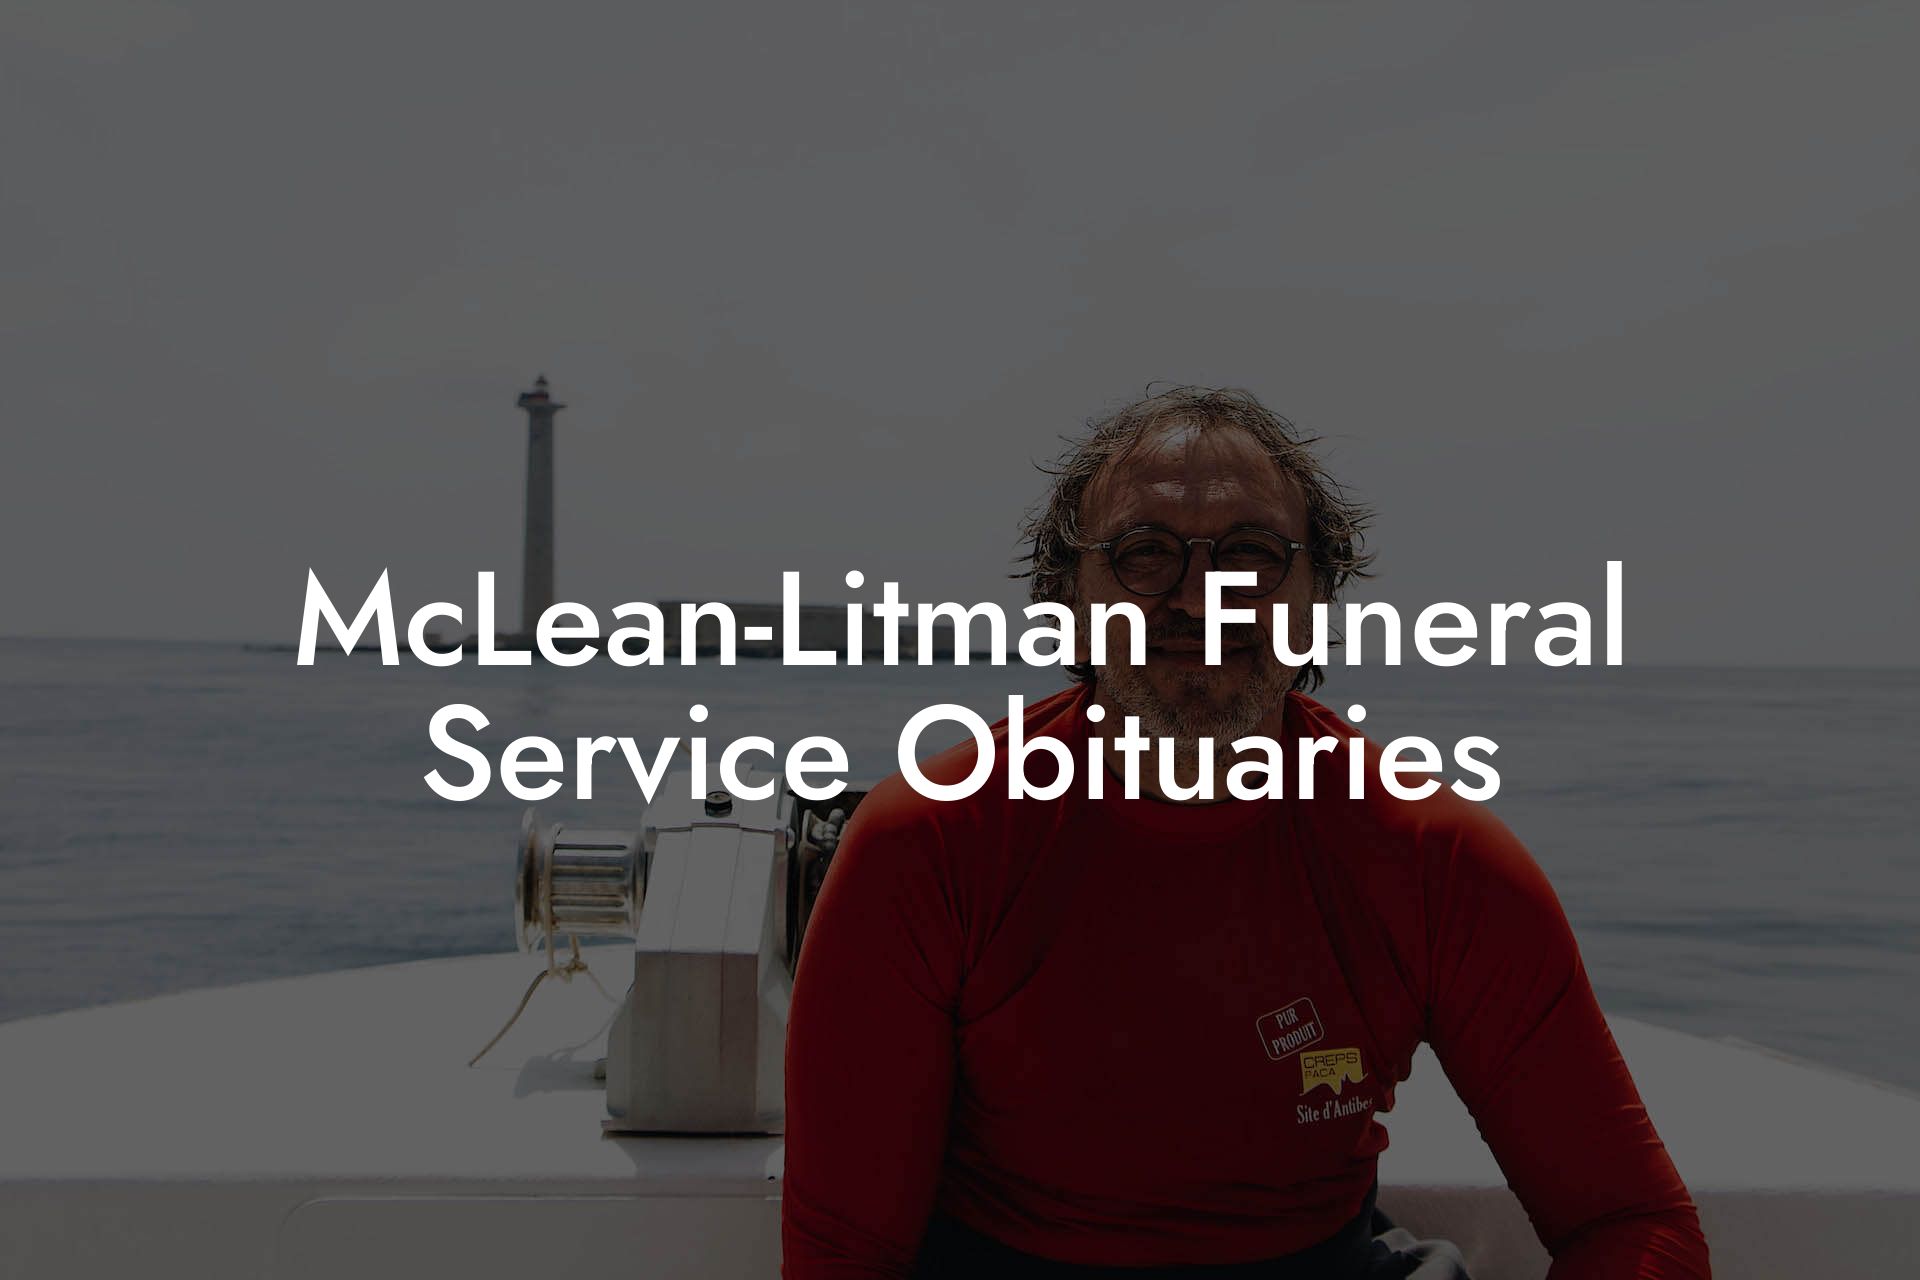 McLean-Litman Funeral Service Obituaries